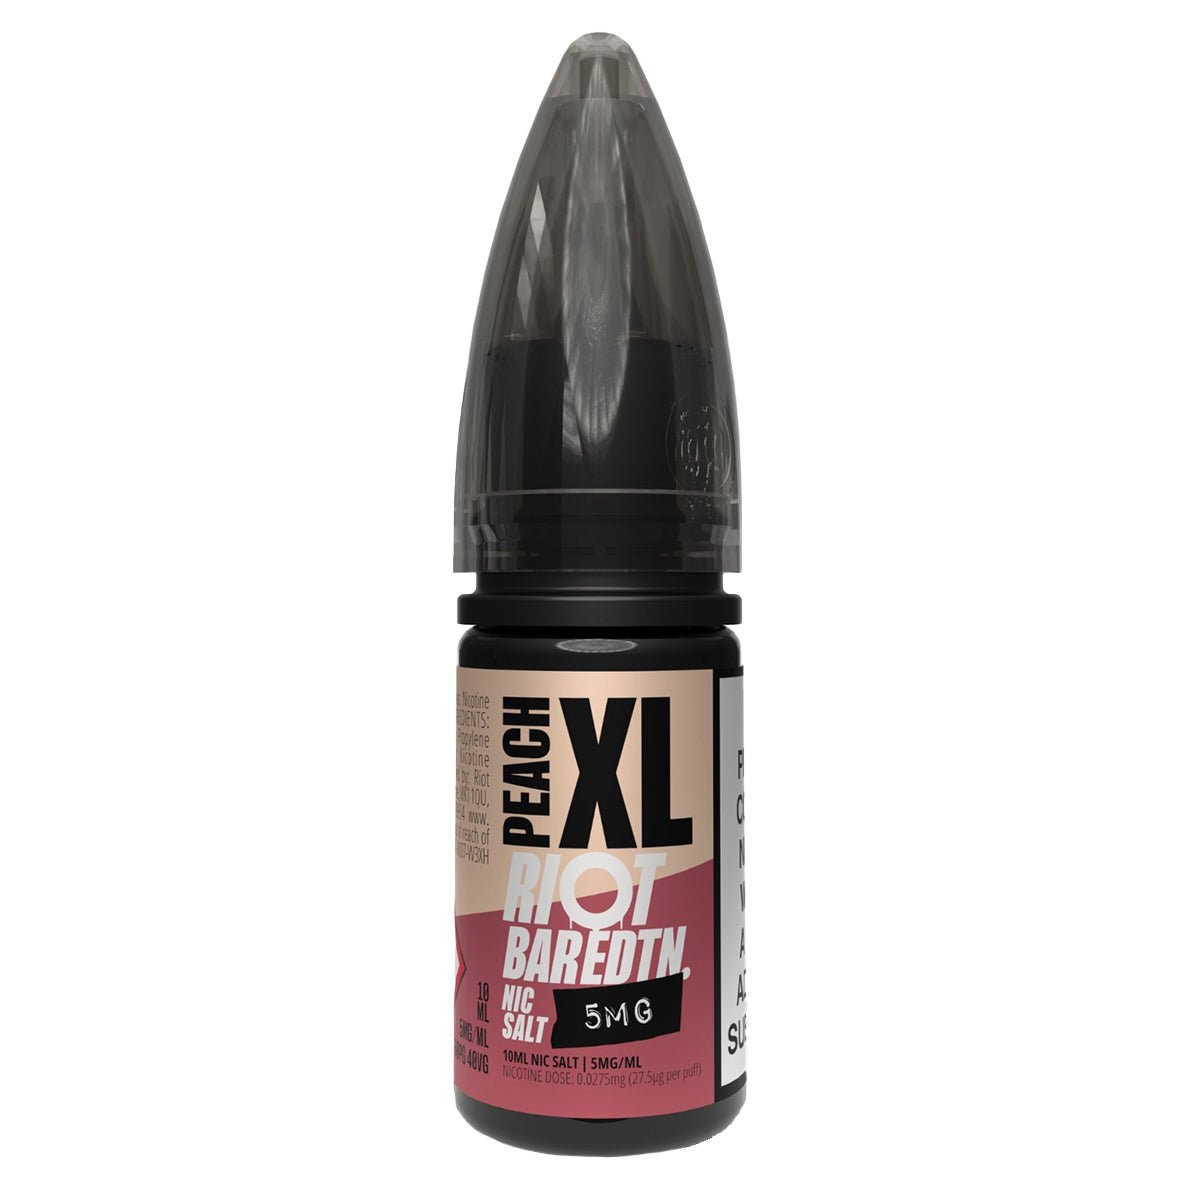 Peach XL BAR EDTN 10ml Nic Salt By Riot Squad - Prime Vapes UK